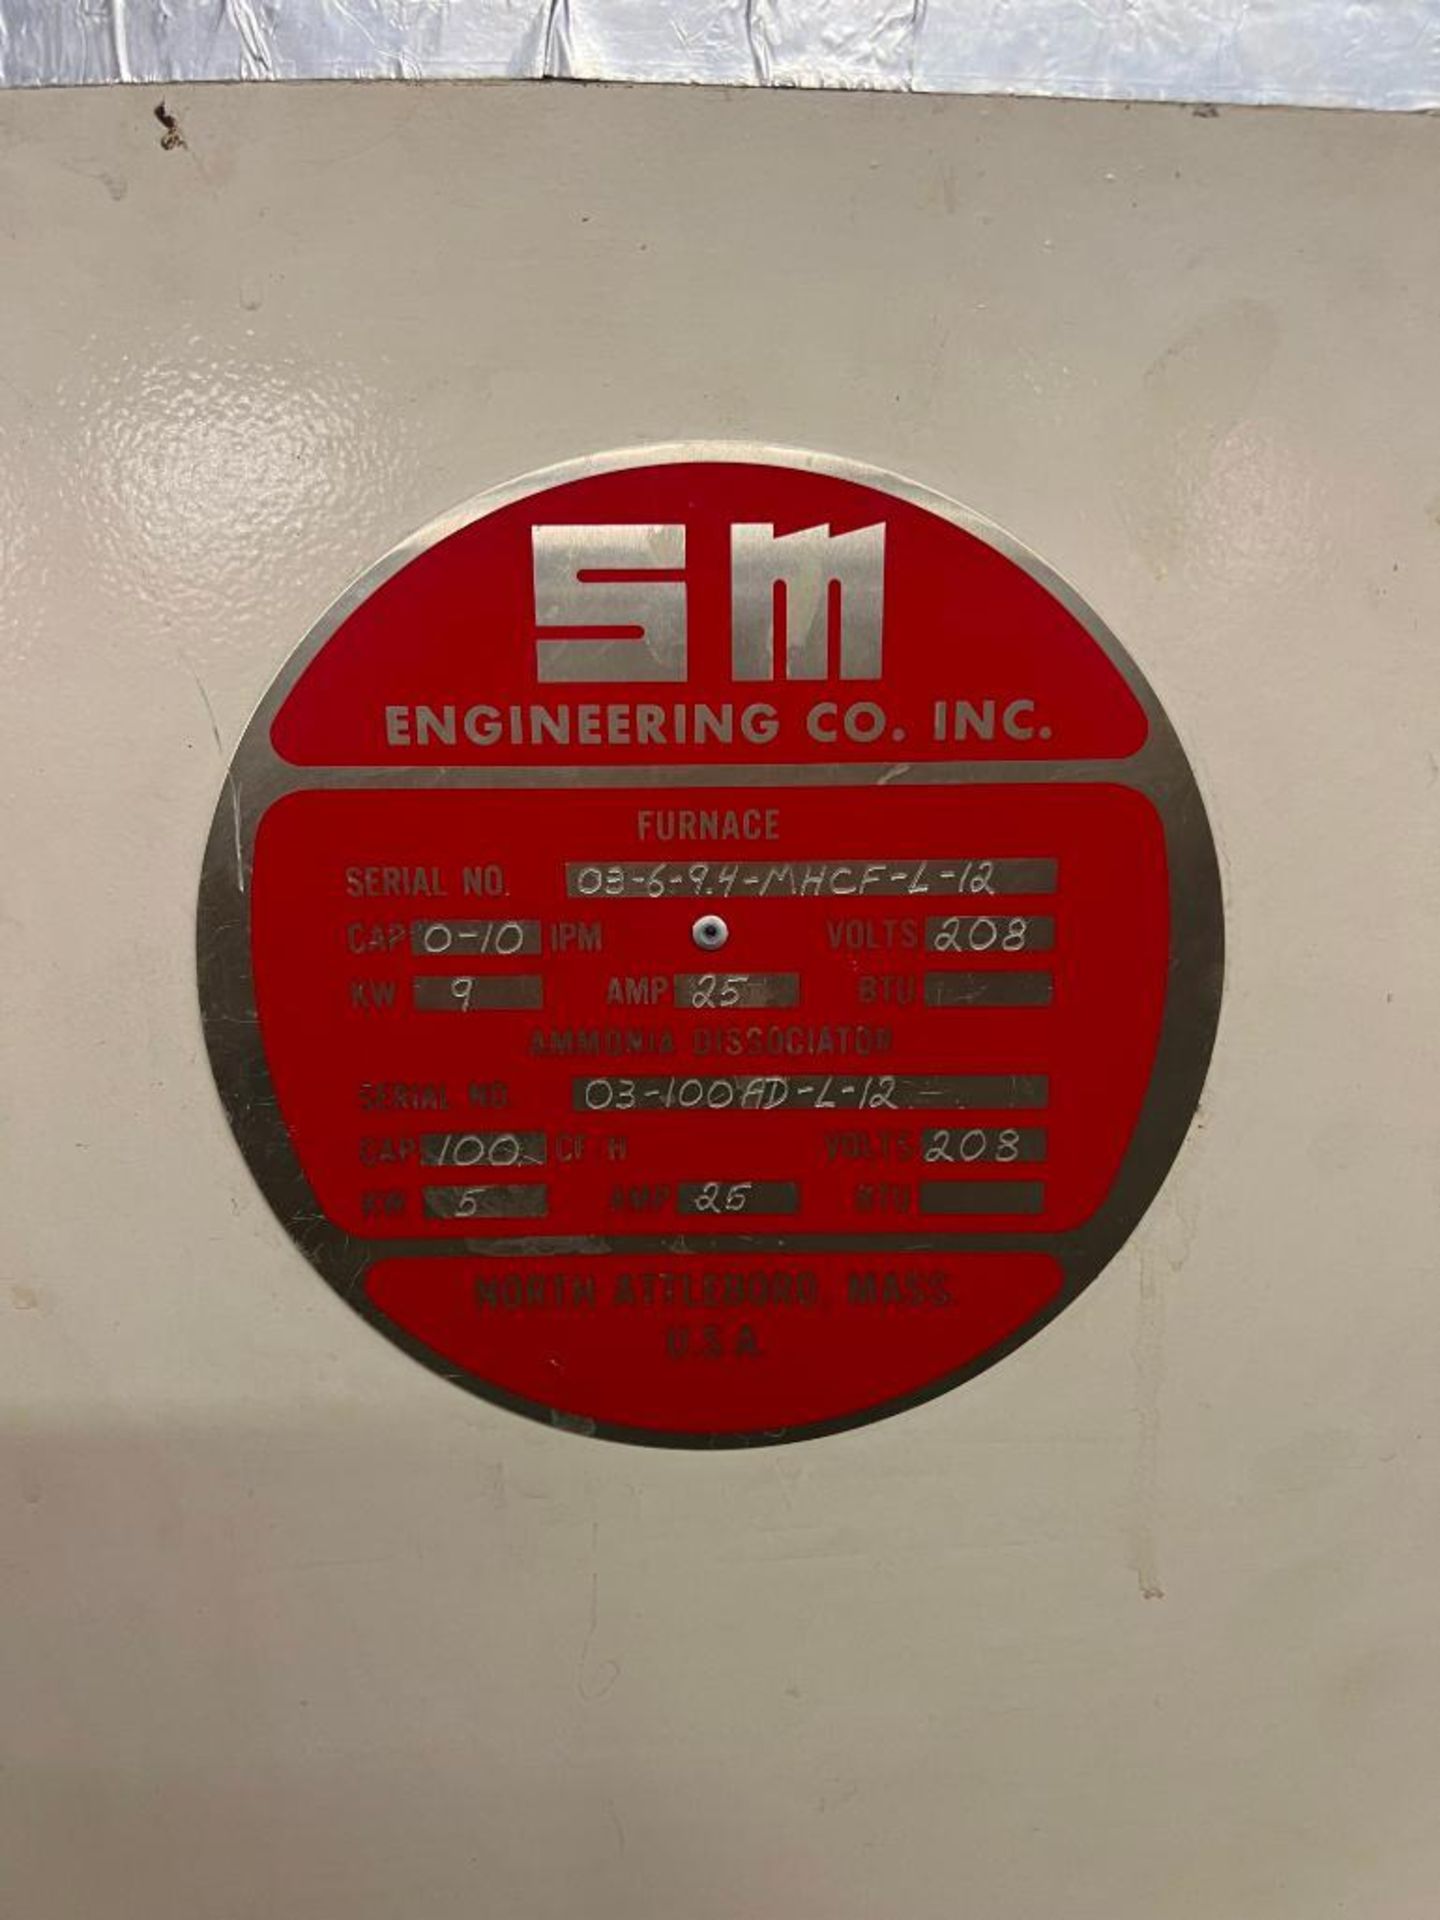 SM ENGINEERING CO 6" BELT AMMONIA DISSOCIATOR AND FURNACE - Image 10 of 10